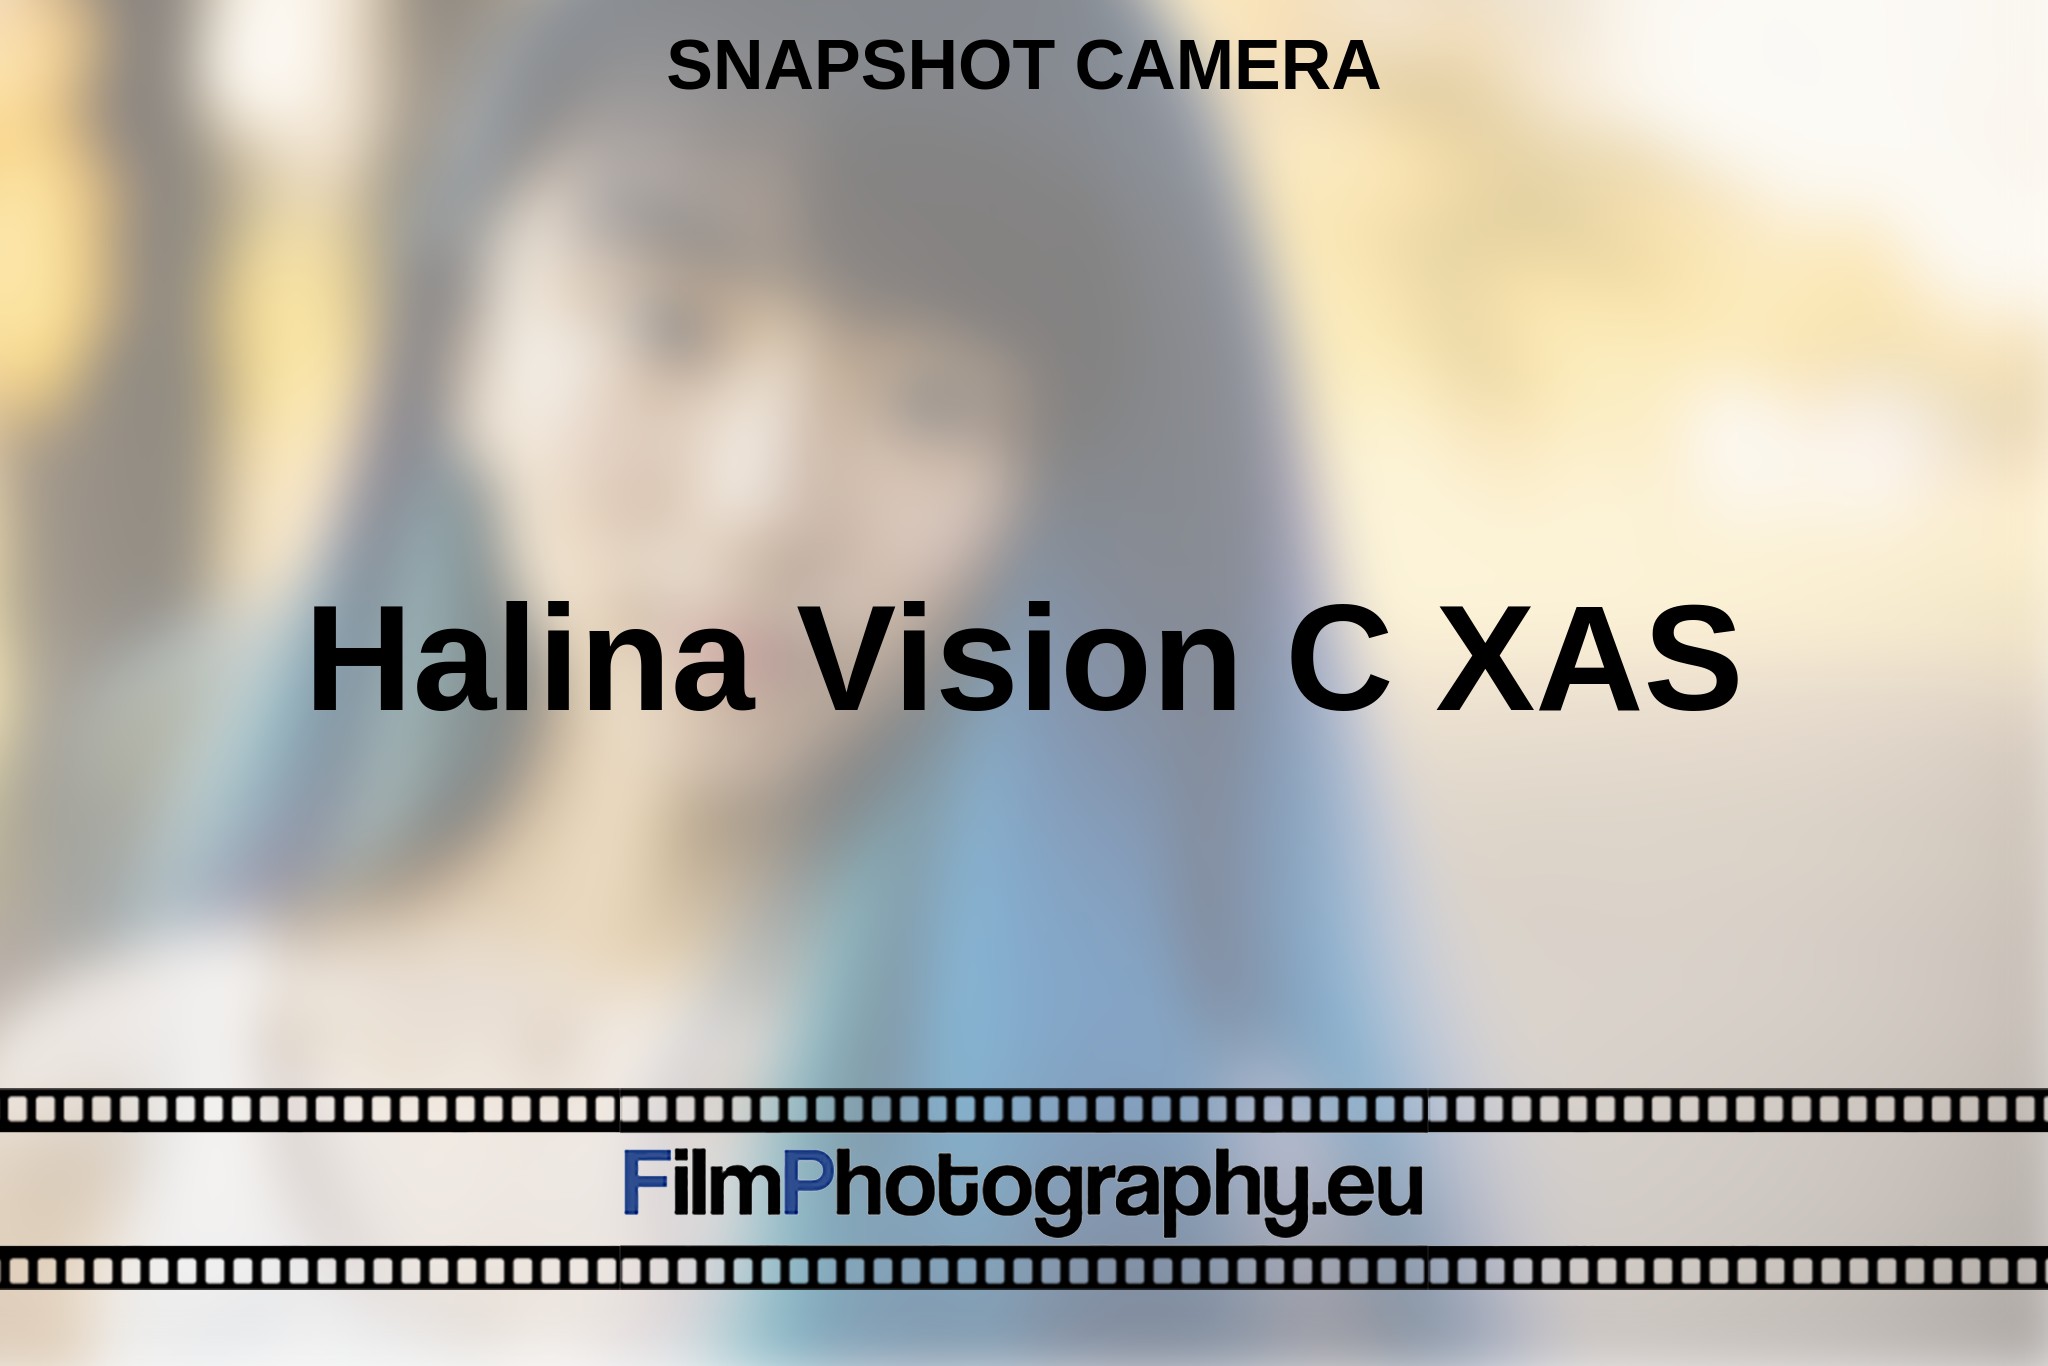 halina-vision-c-xas-snapshot-camera-en-bnv.jpg